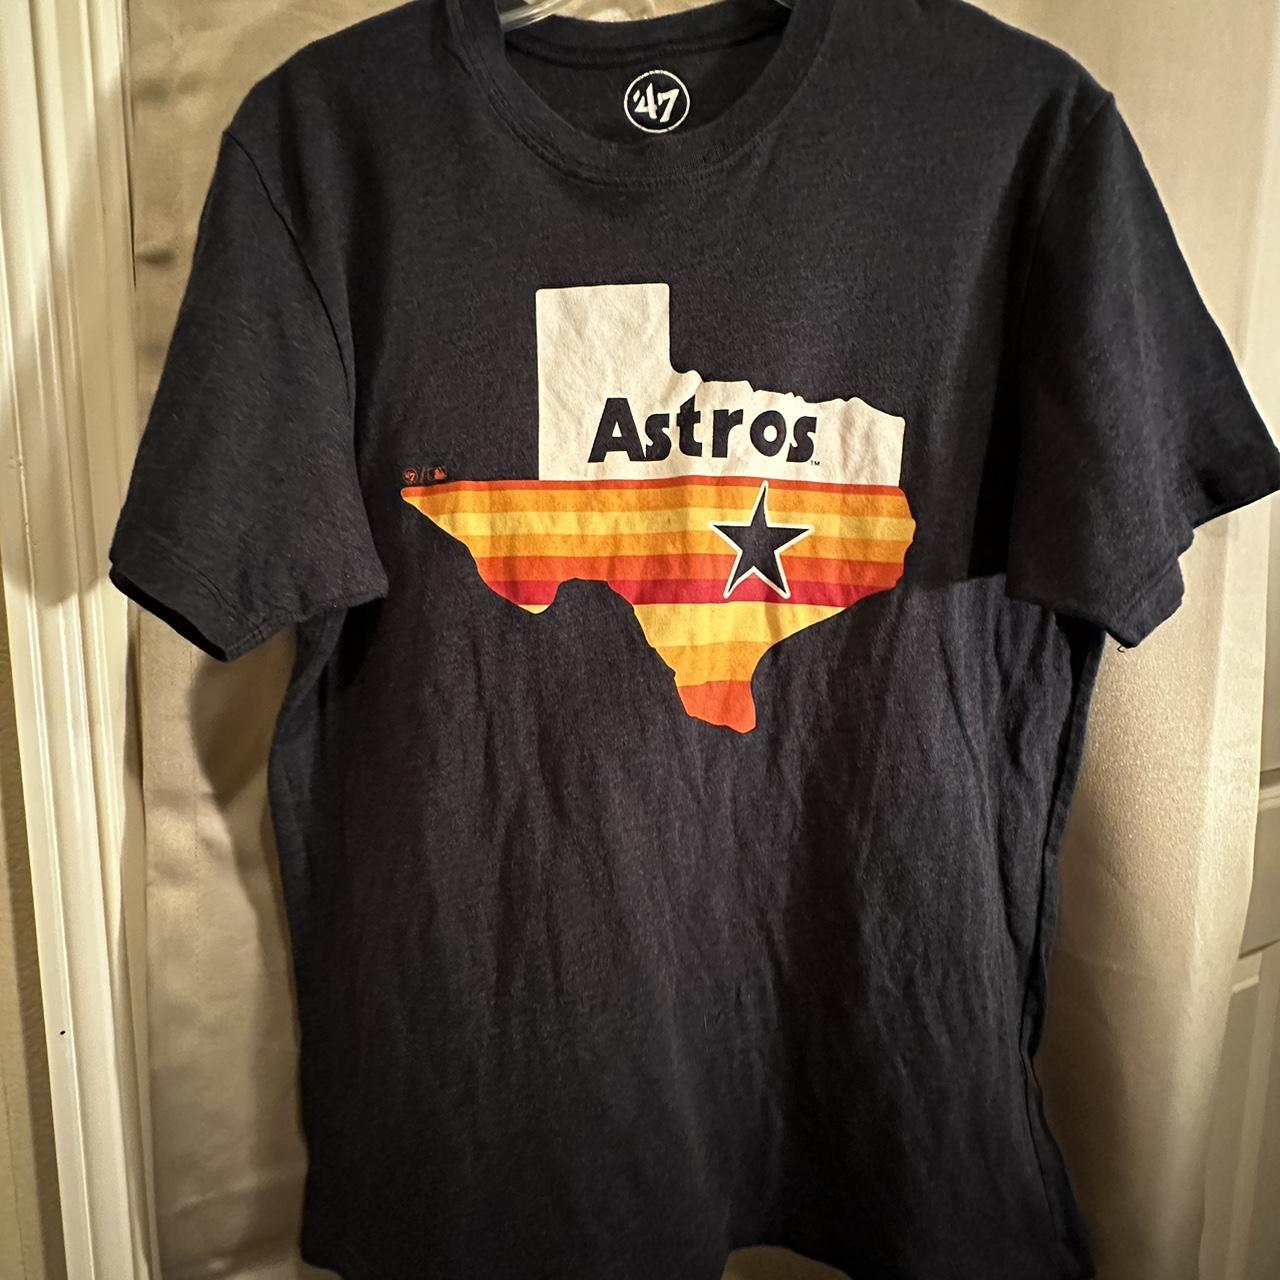 47 astros shirts